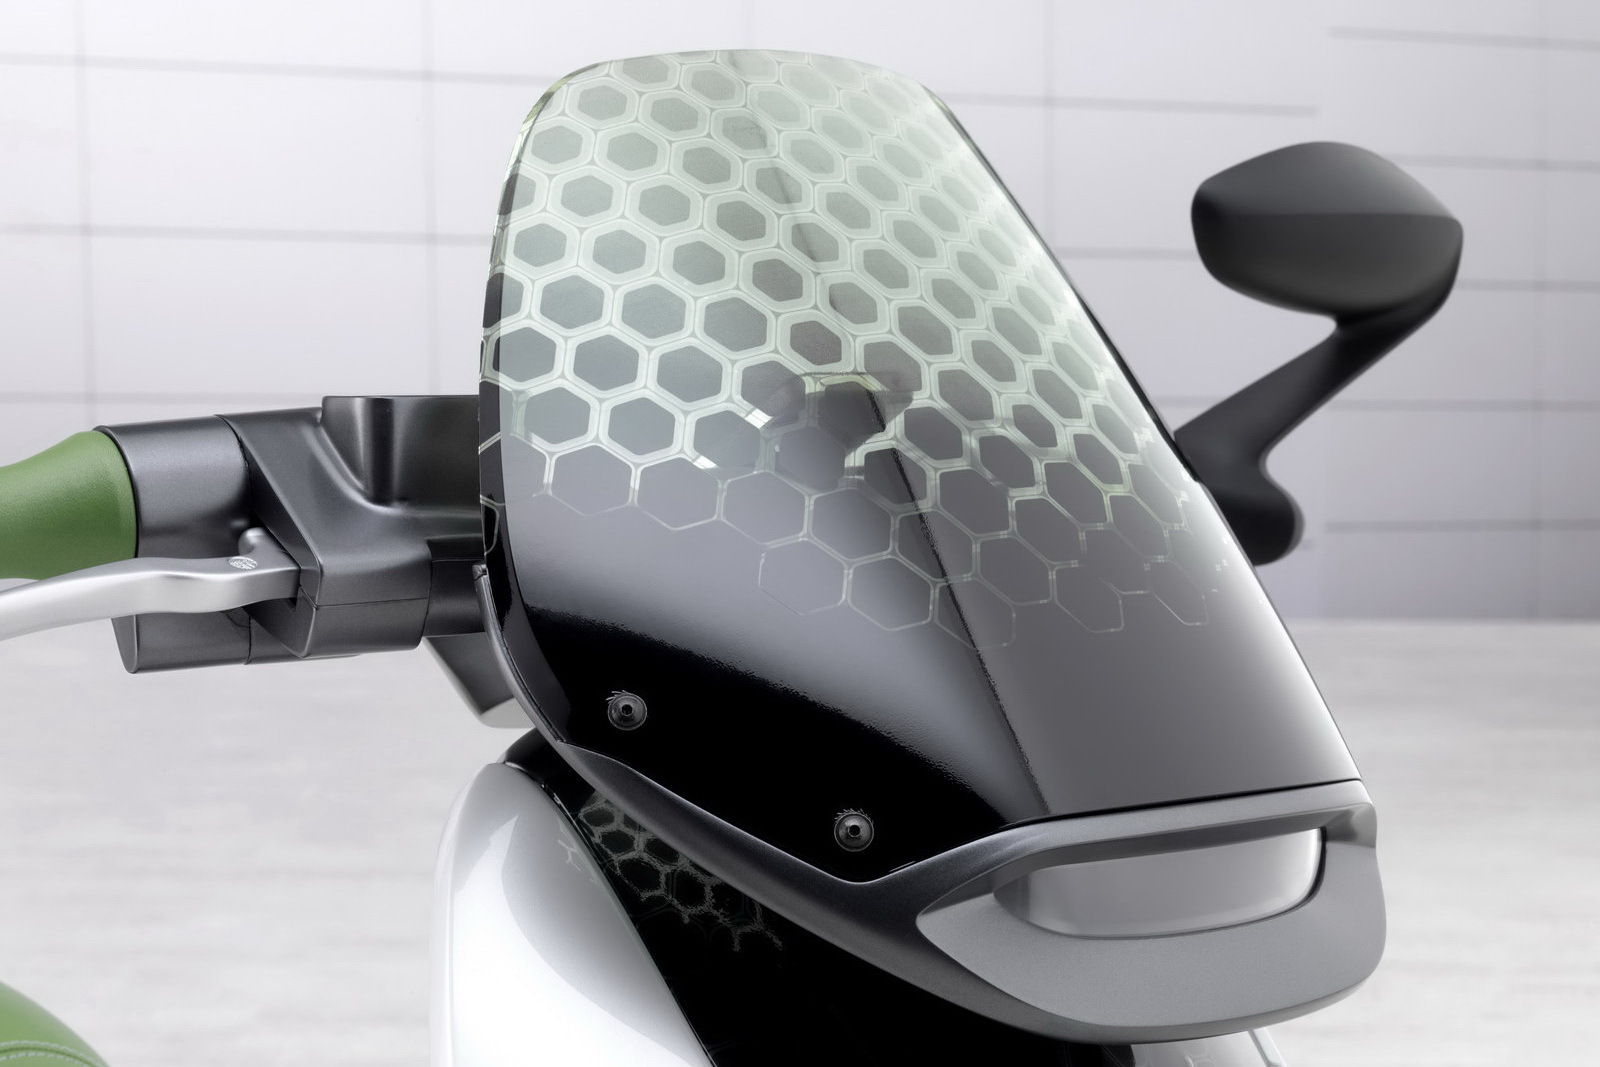 smart escooter este dotat cu ABS, airbag si chiar sistem Blind Spot Assist